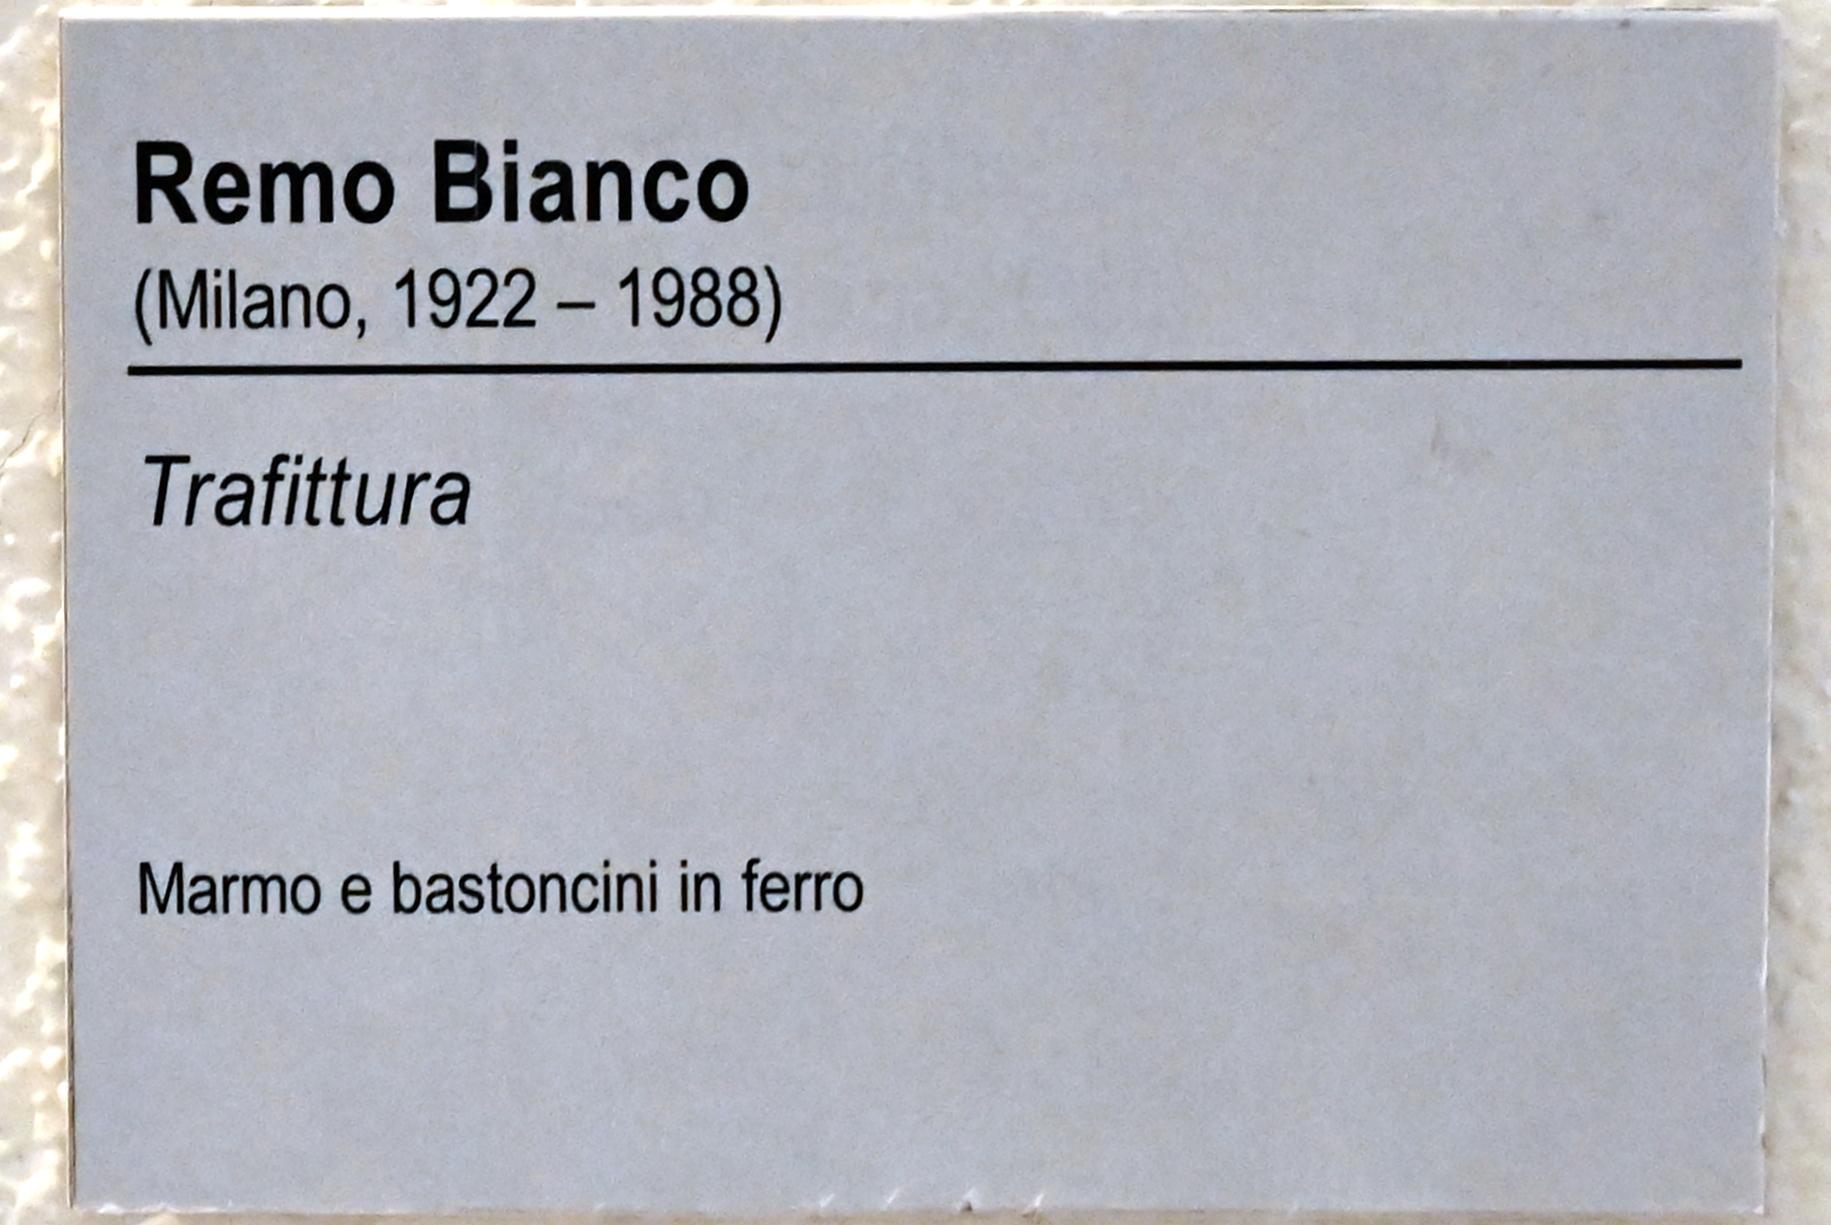 Remo Bianco (Undatiert), Piercing, Ancona, Pinacoteca civica Francesco Podesti, Treppenhaus, Undatiert, Bild 3/3